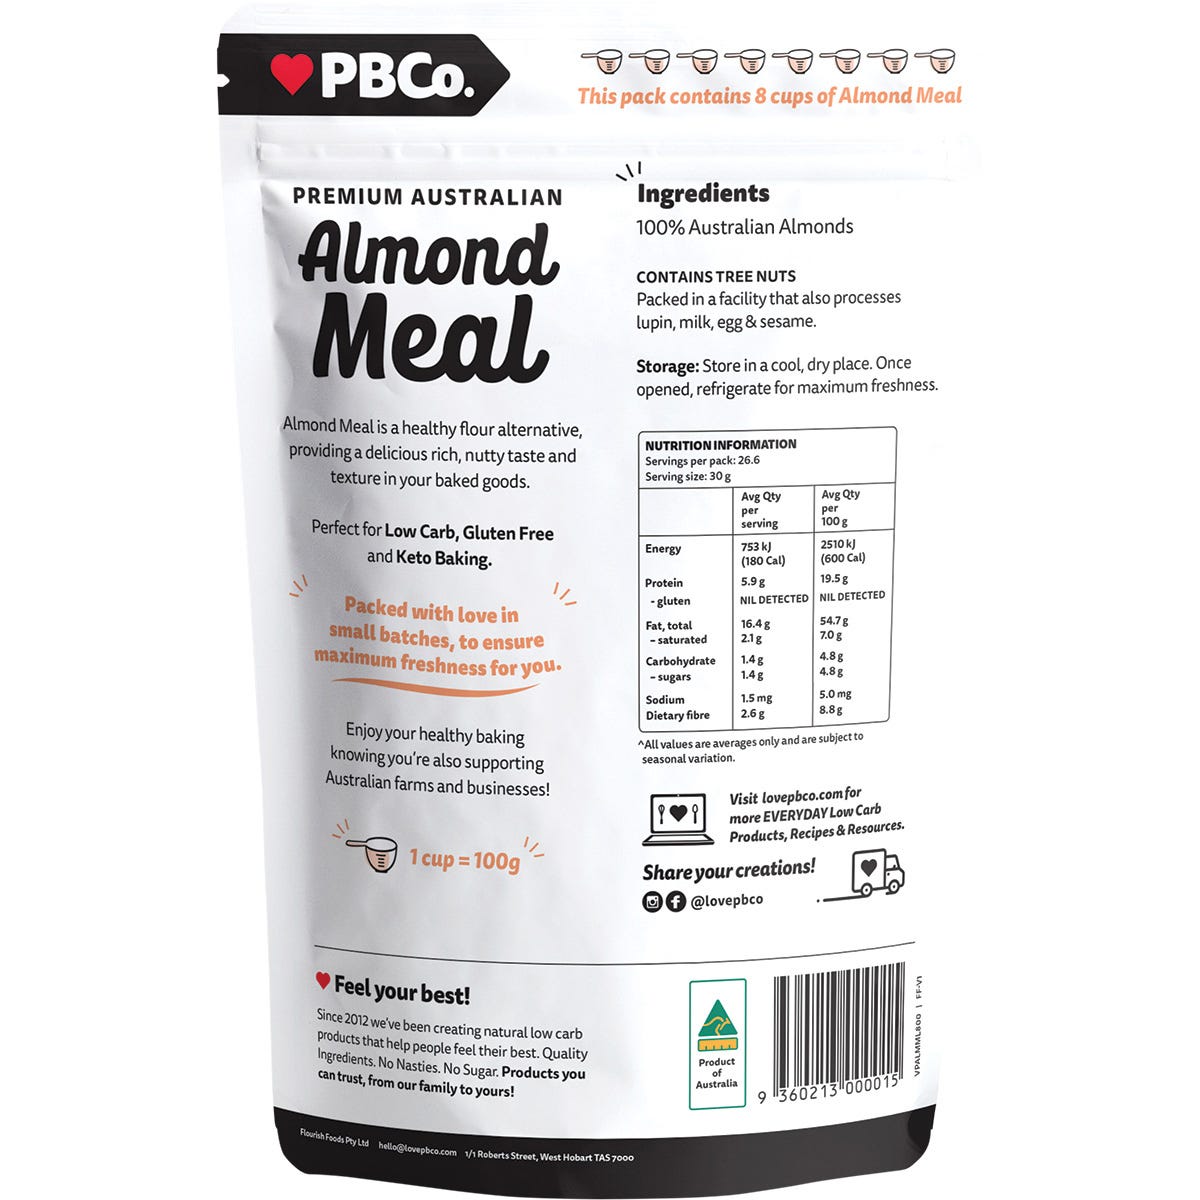 PBco Almond Meal Premium Australian